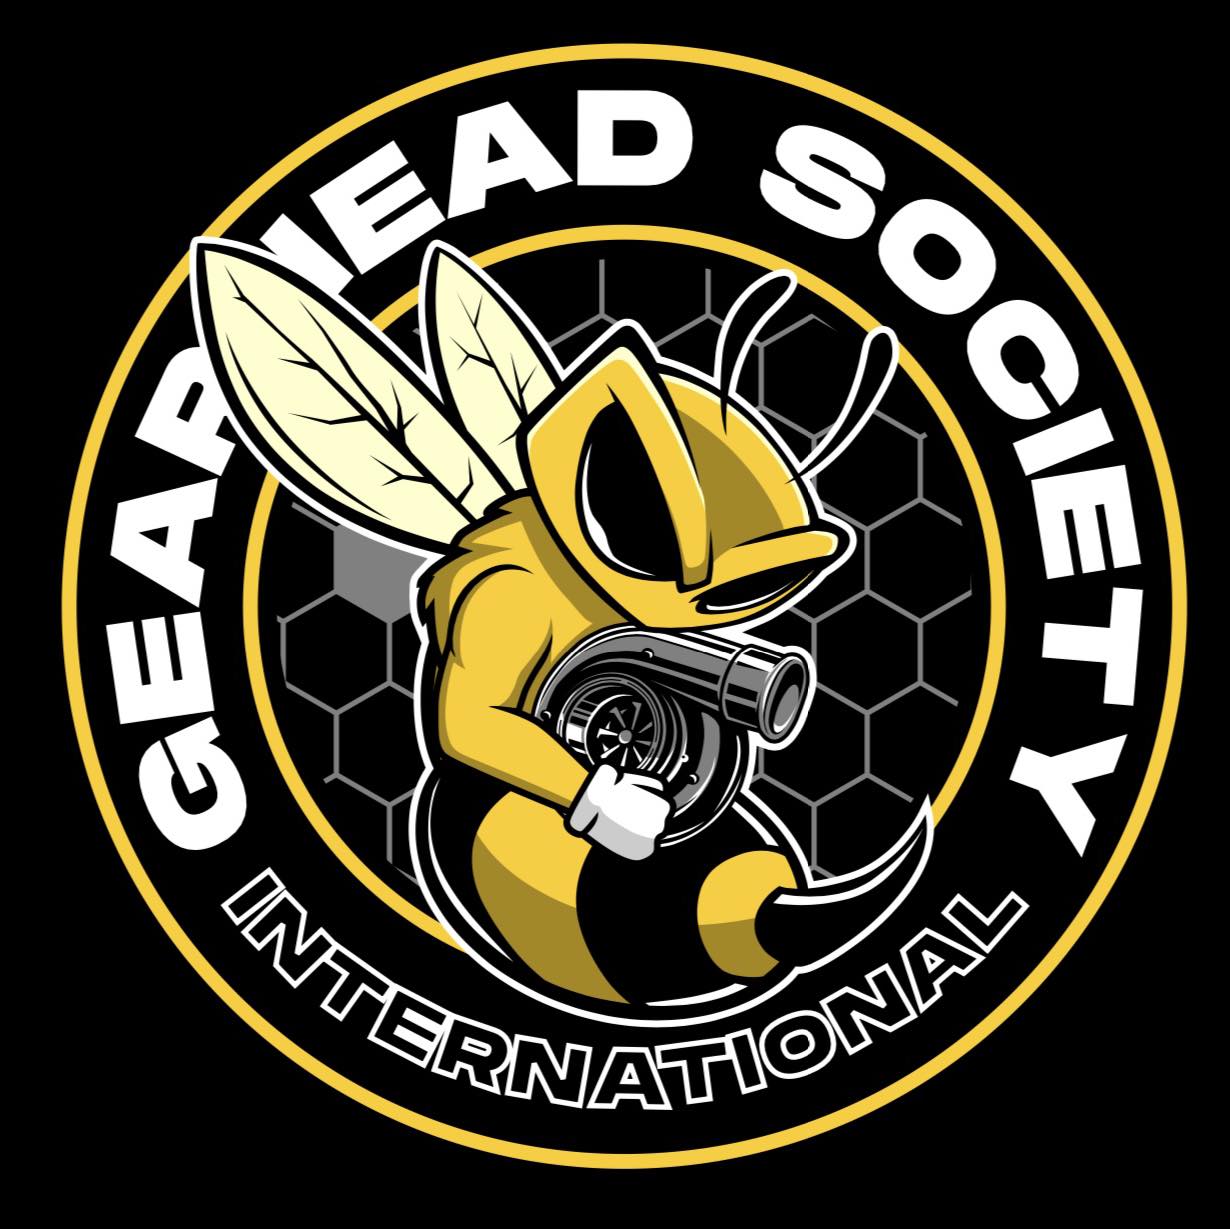 GearHead Society